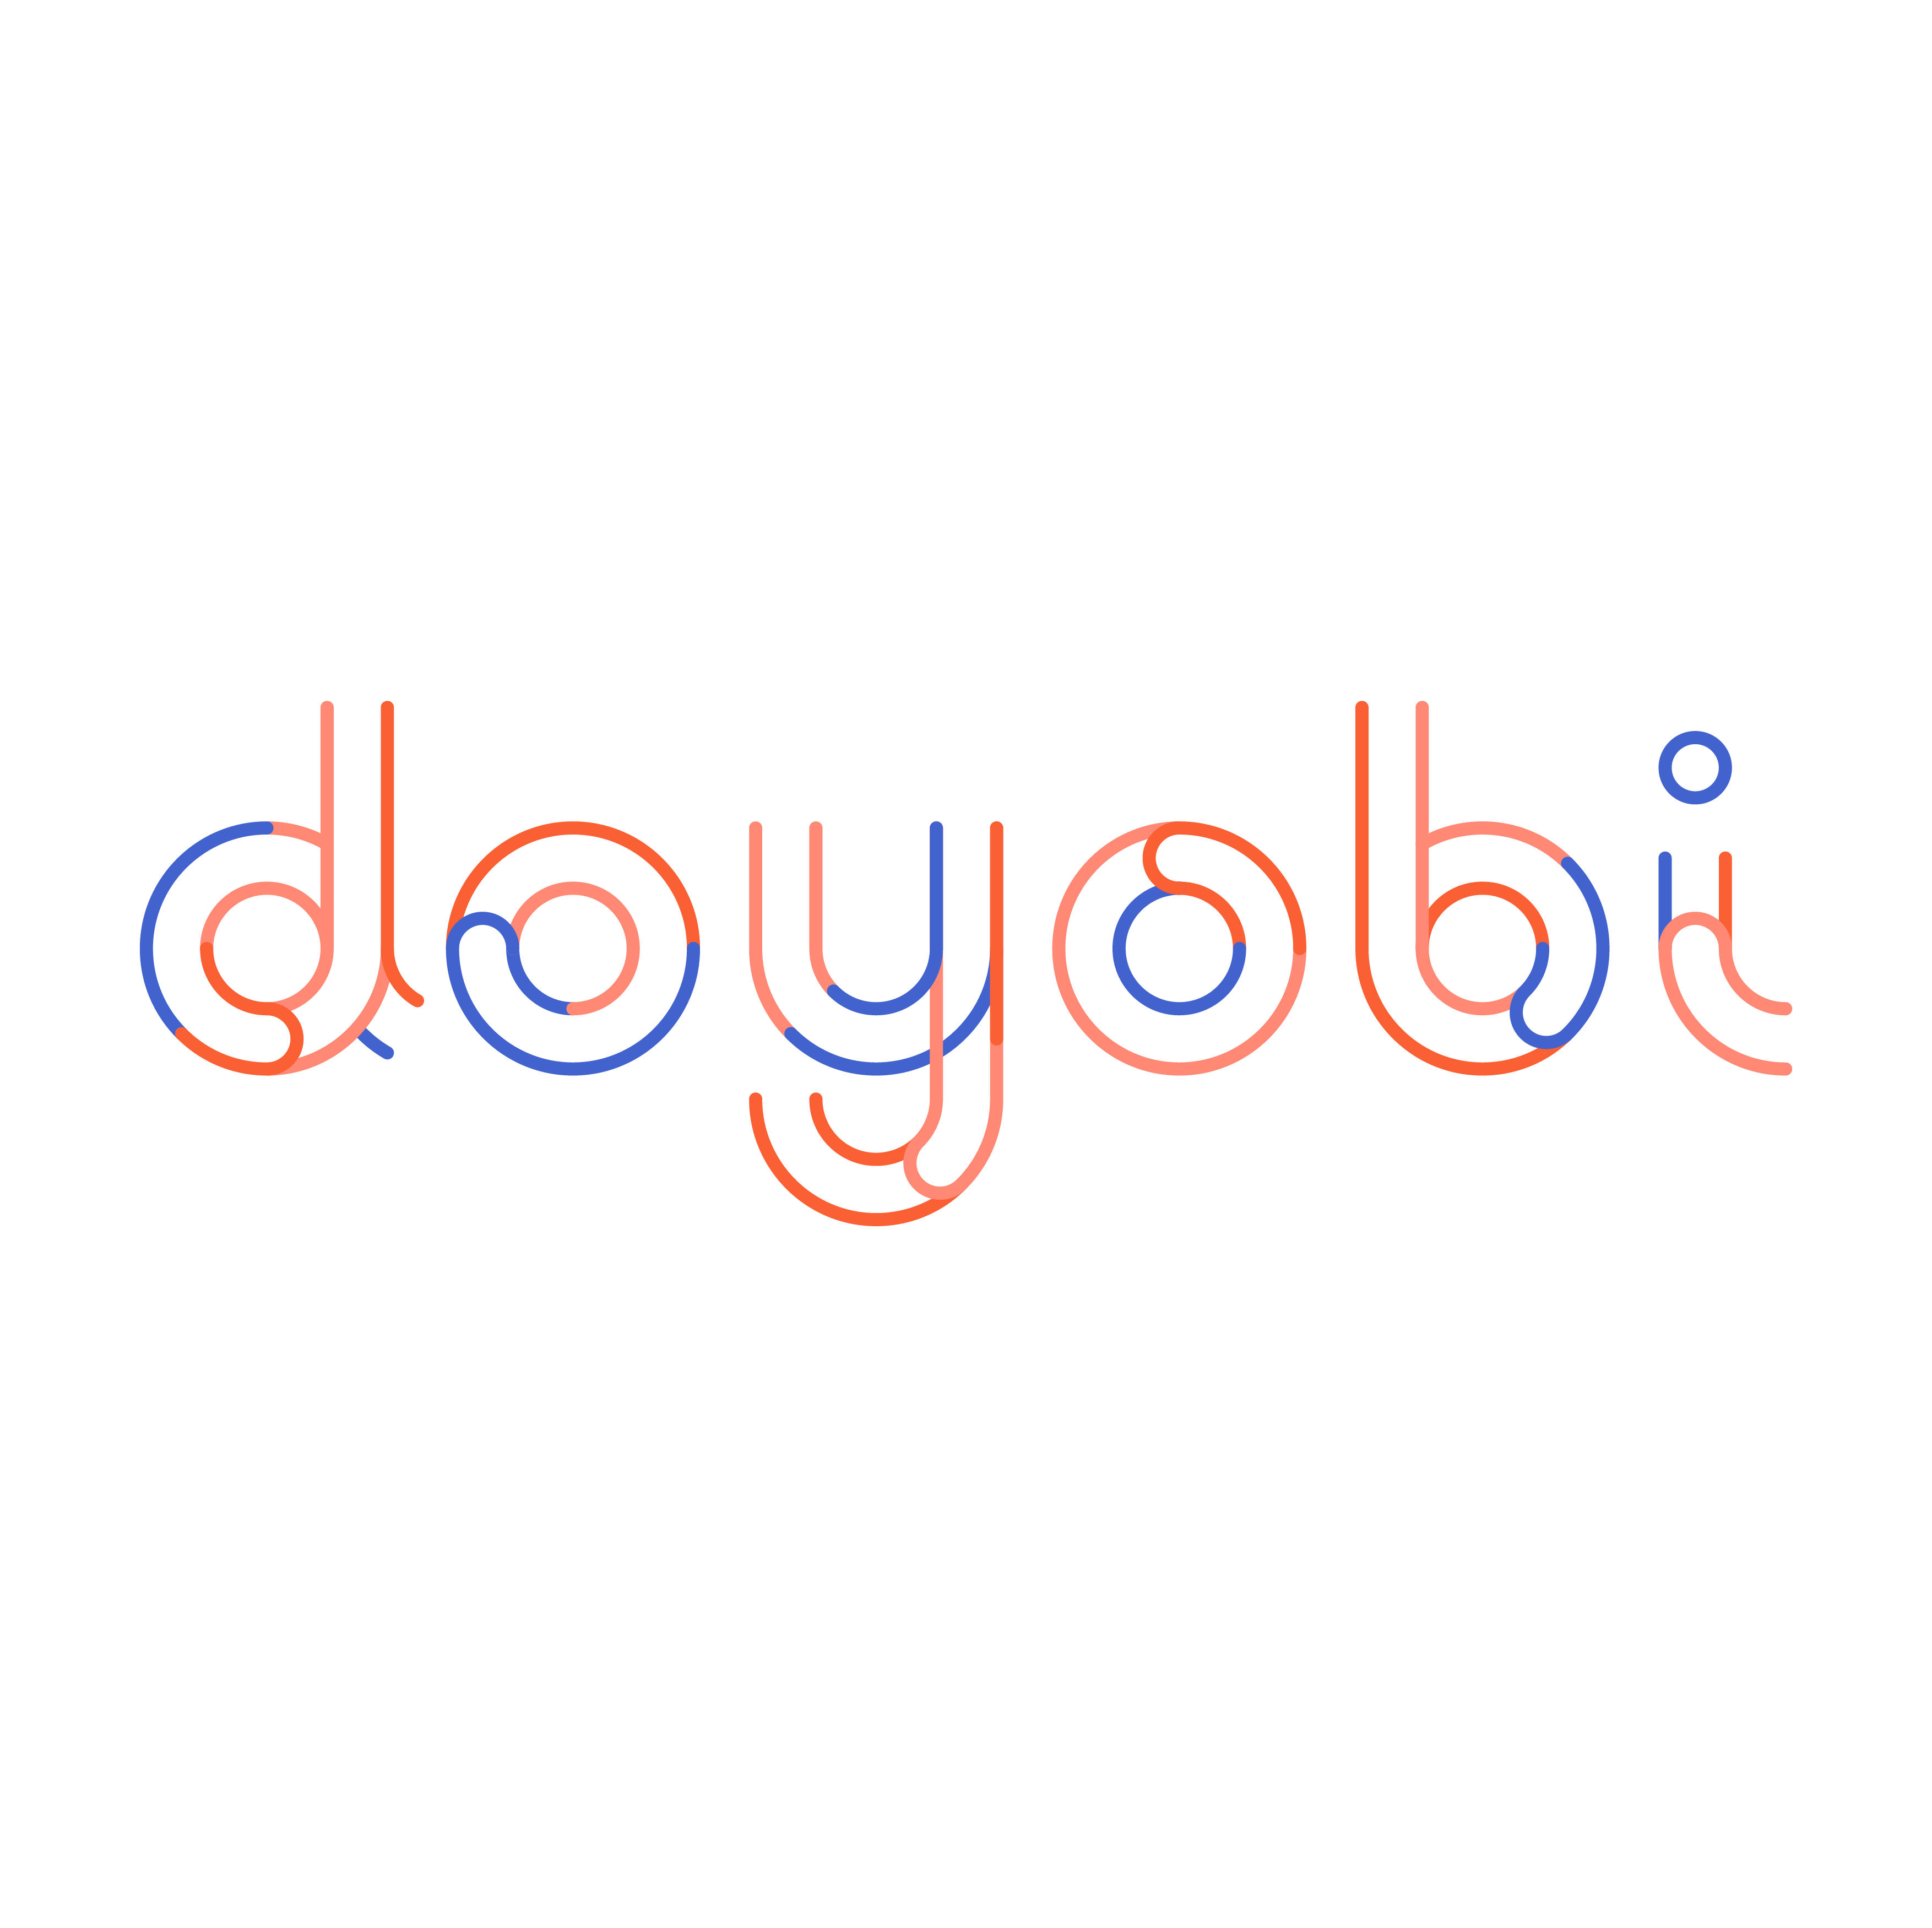 Doyobi